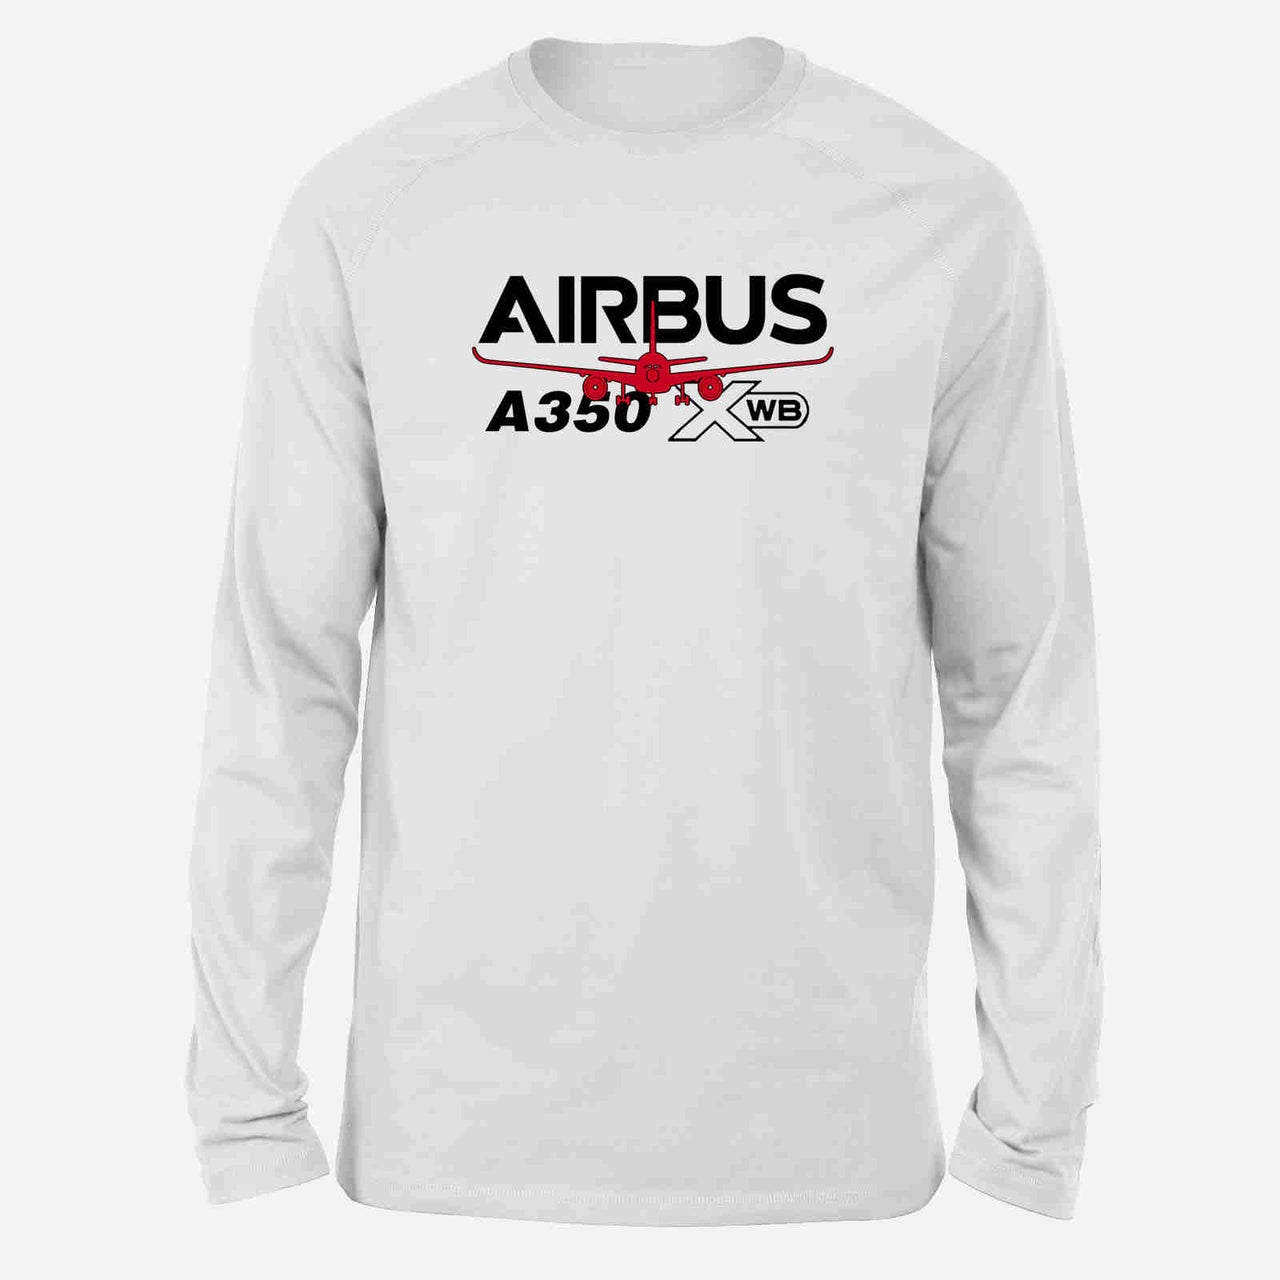 Amazing Airbus A350 XWB Designed Long-Sleeve T-Shirts